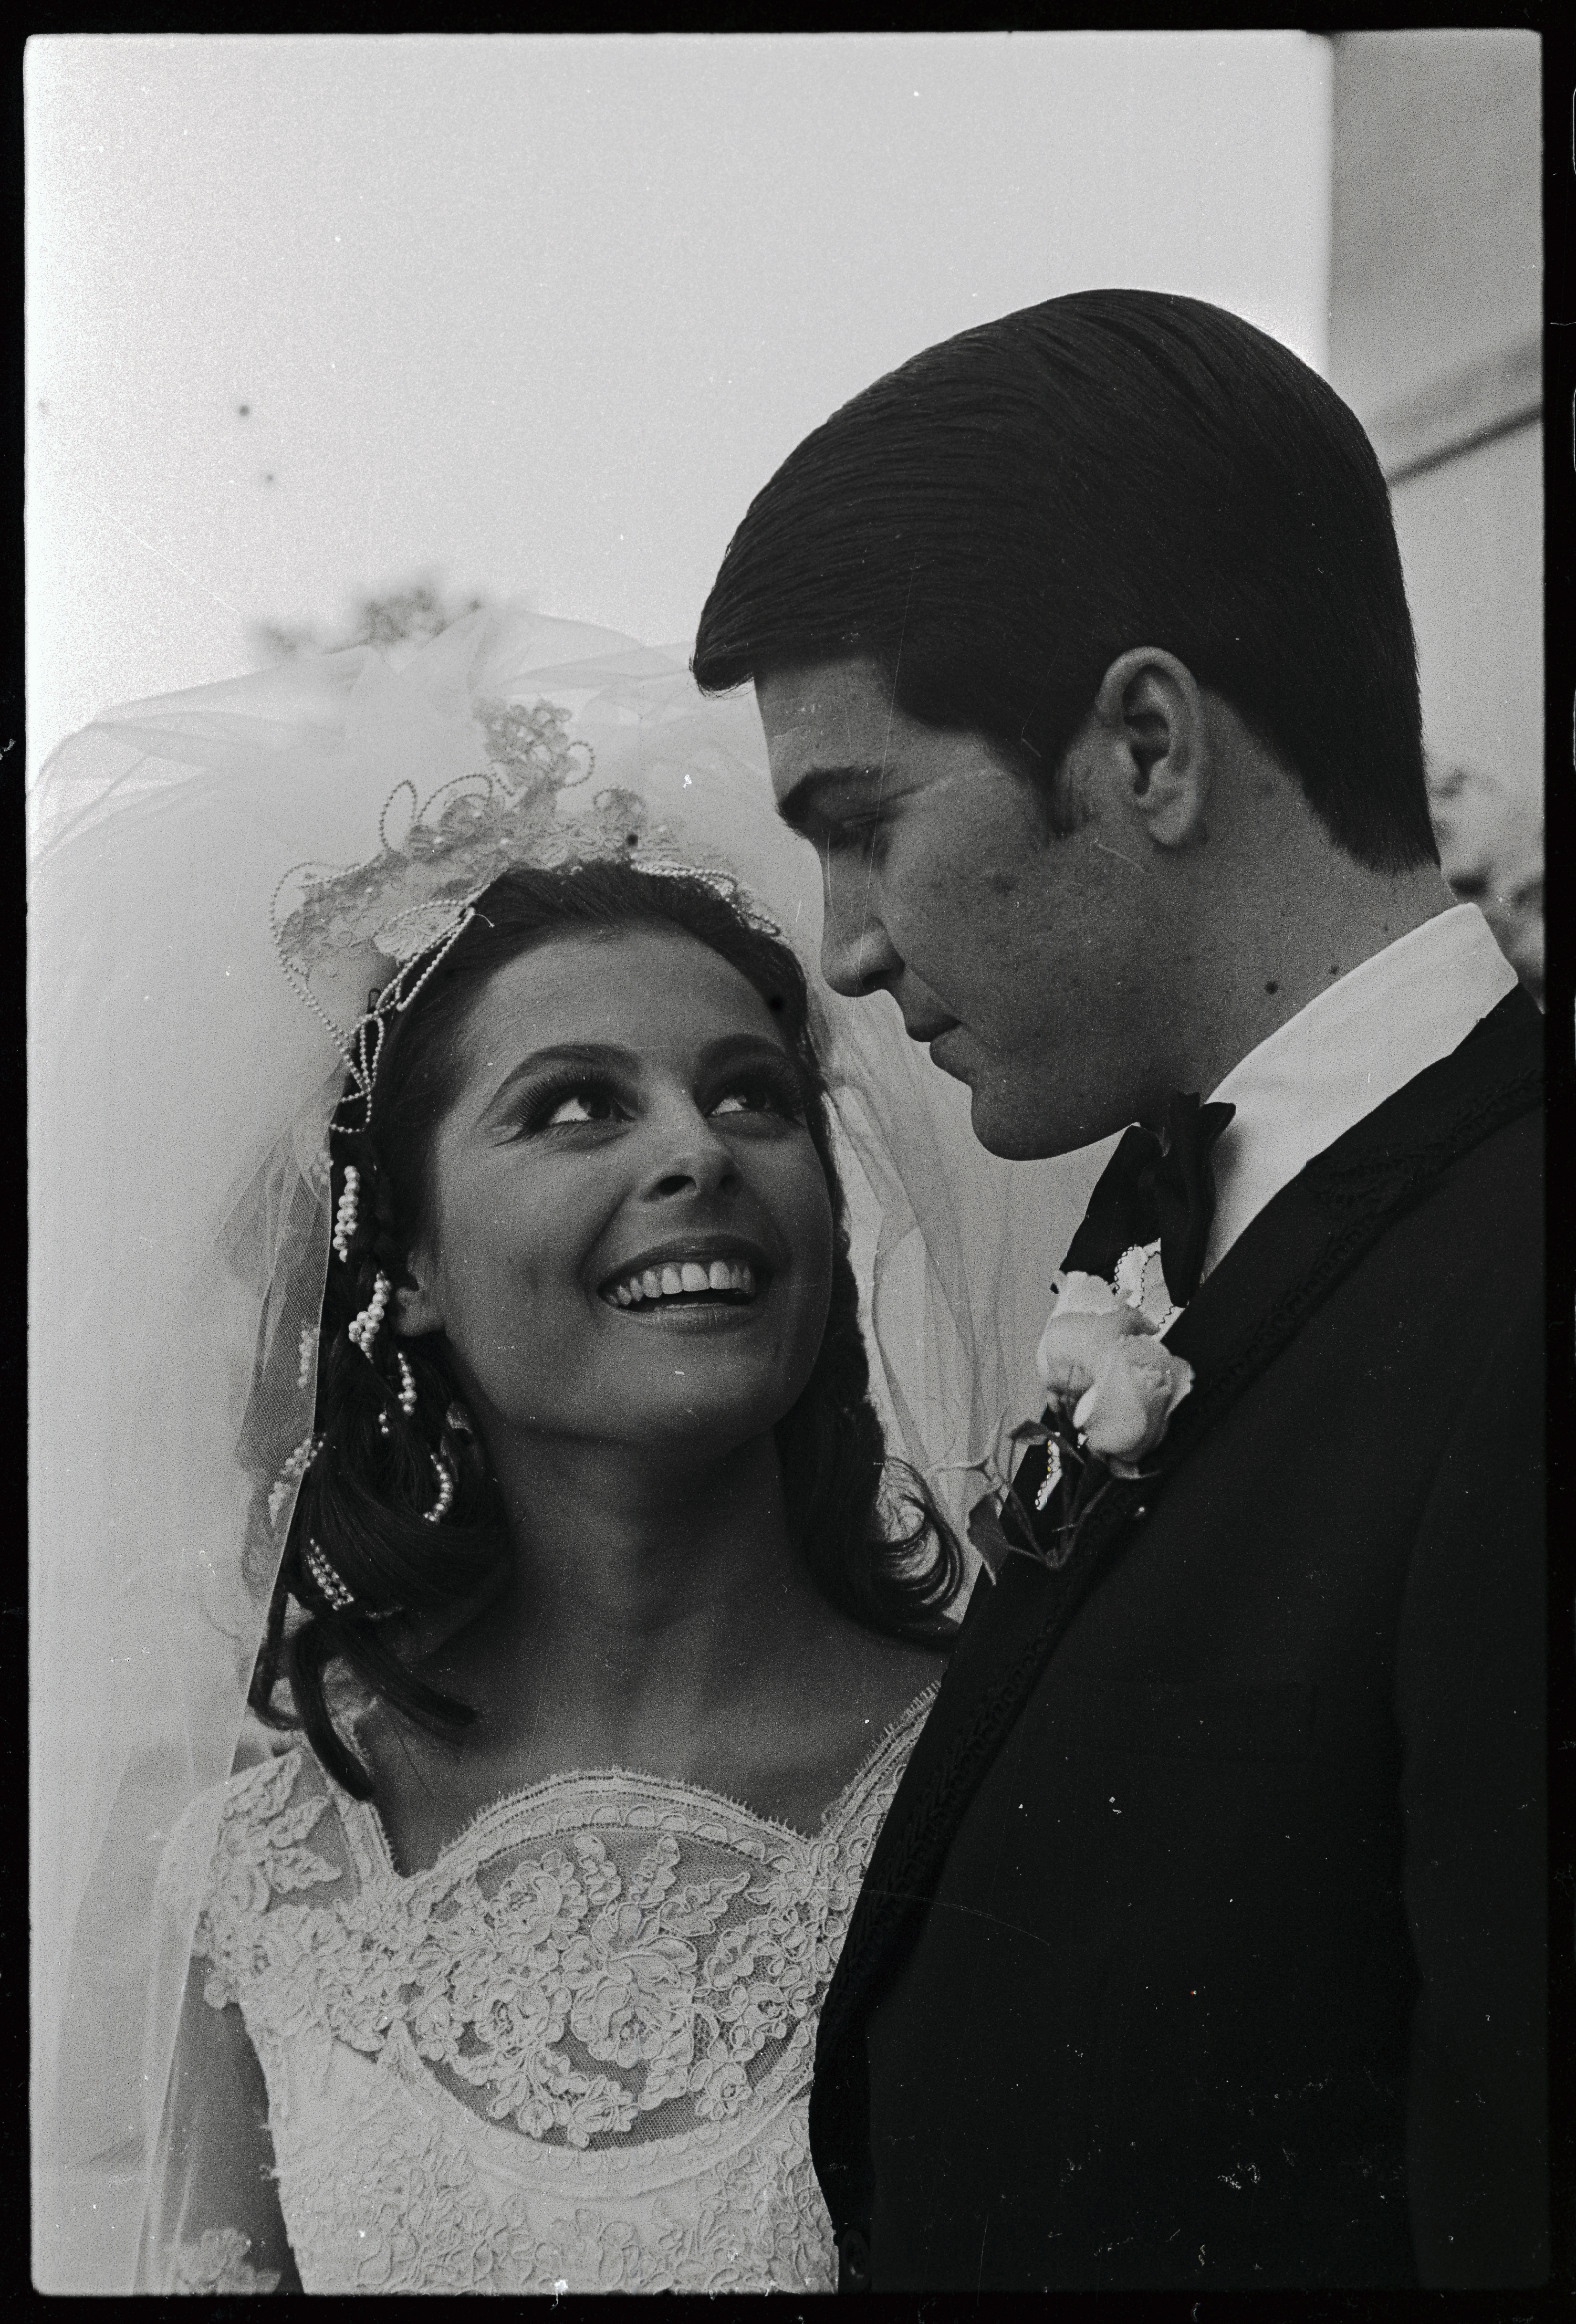 Paul Petersen and his Bride Brenda Benet circa 1967. | Source: Getty Images